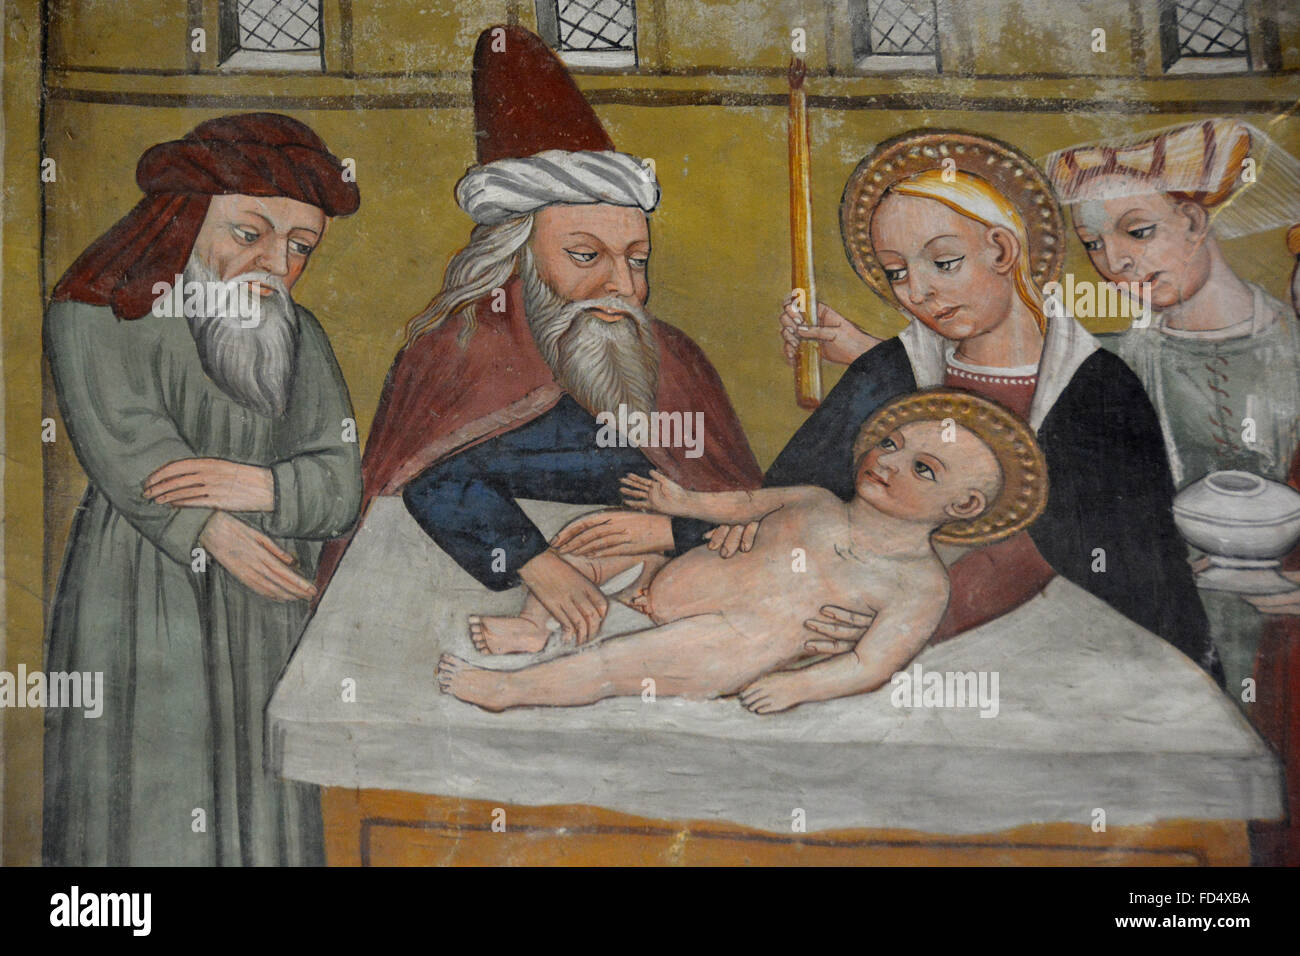 St Antony's chapel in Bessans. 16th century painting depicting Jesus's circumcision. Stock Photo